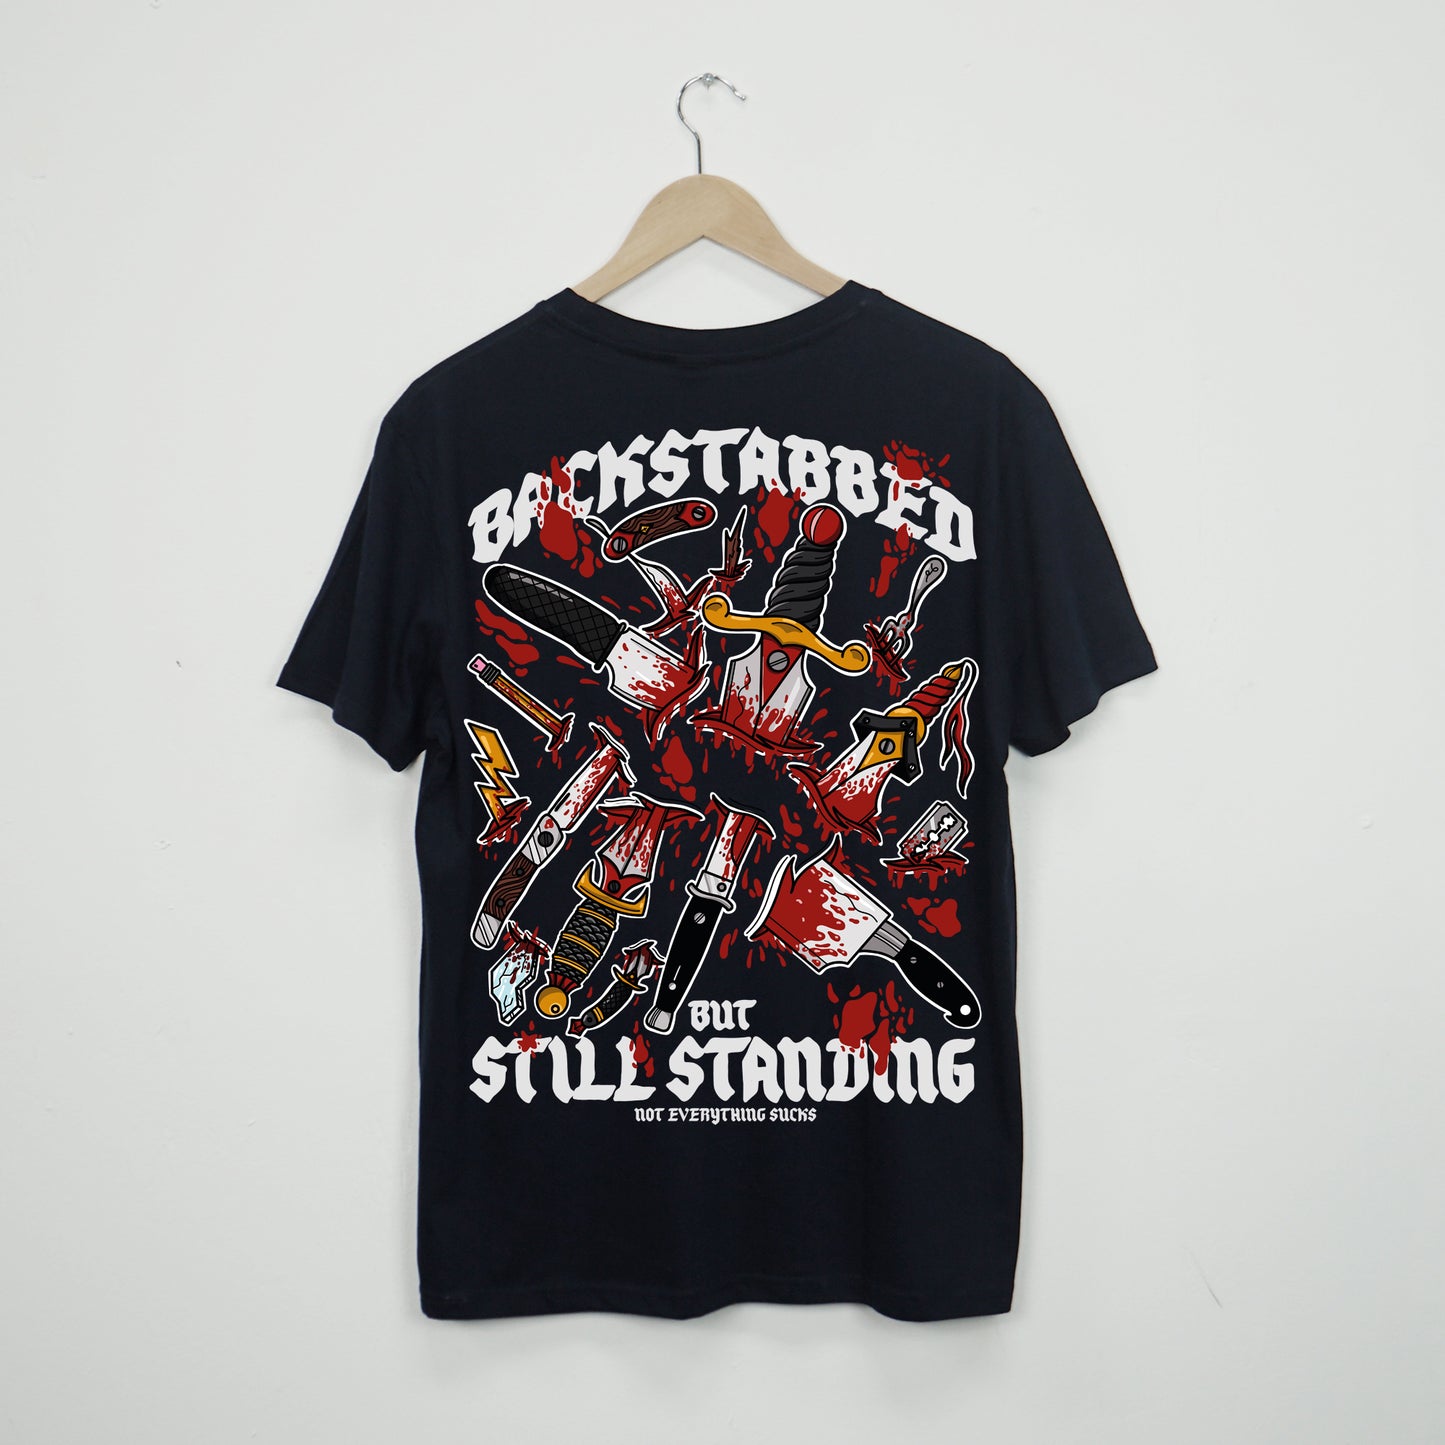 Backstabbed T-Shirt